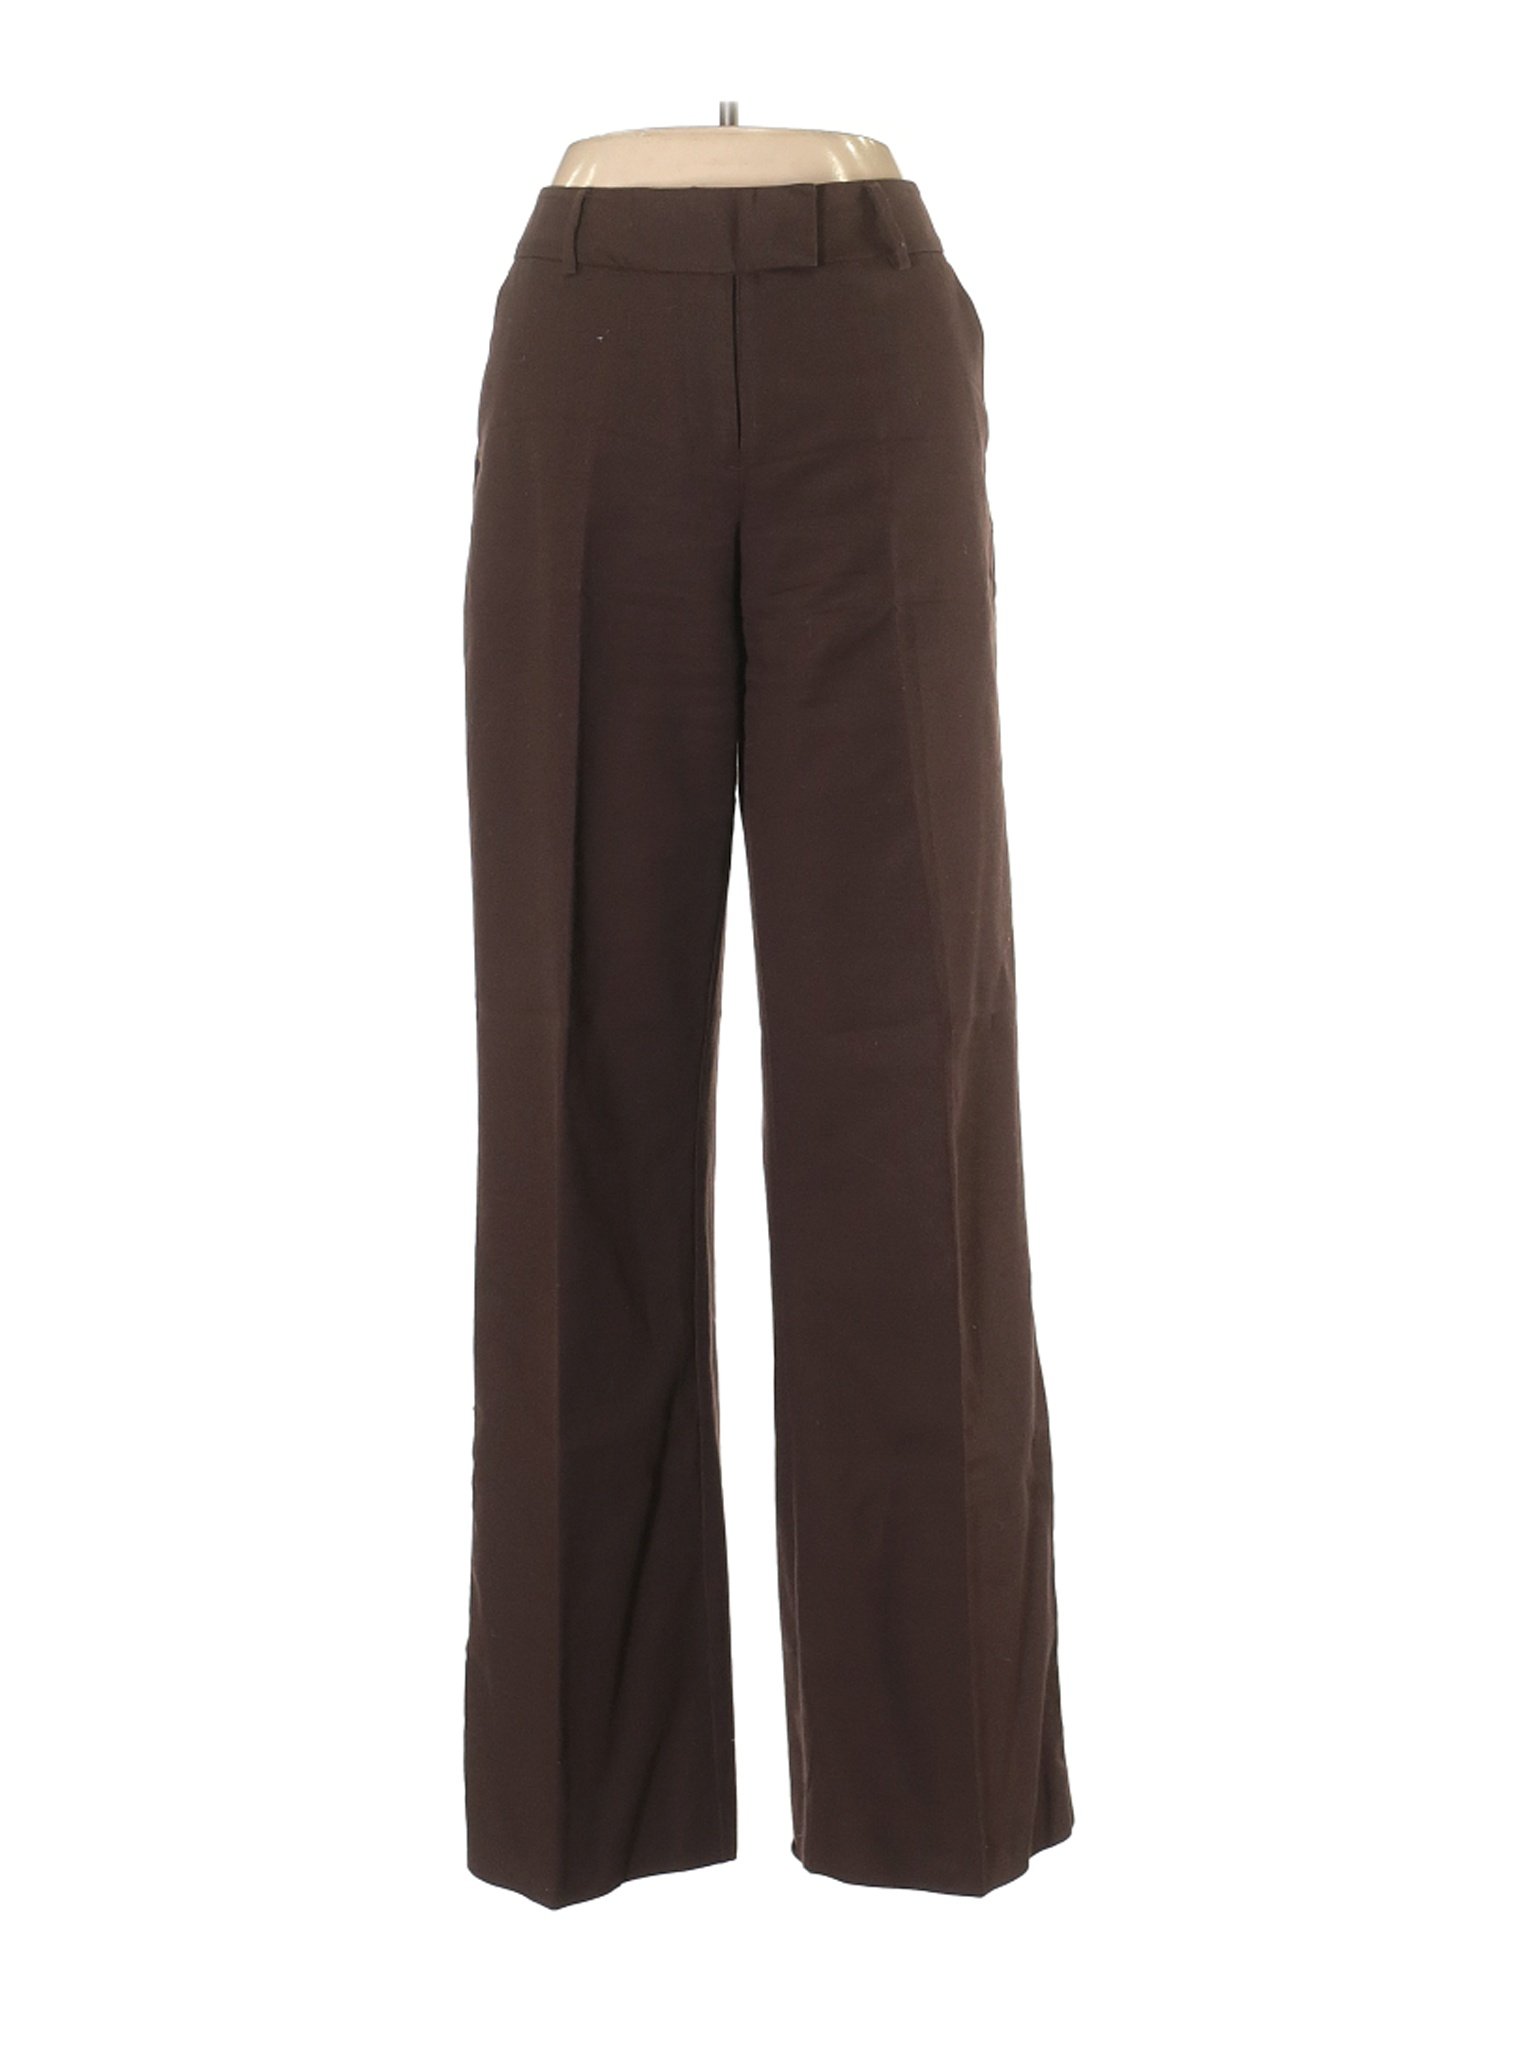 Worthington Women Brown Dress Pants 8 | eBay